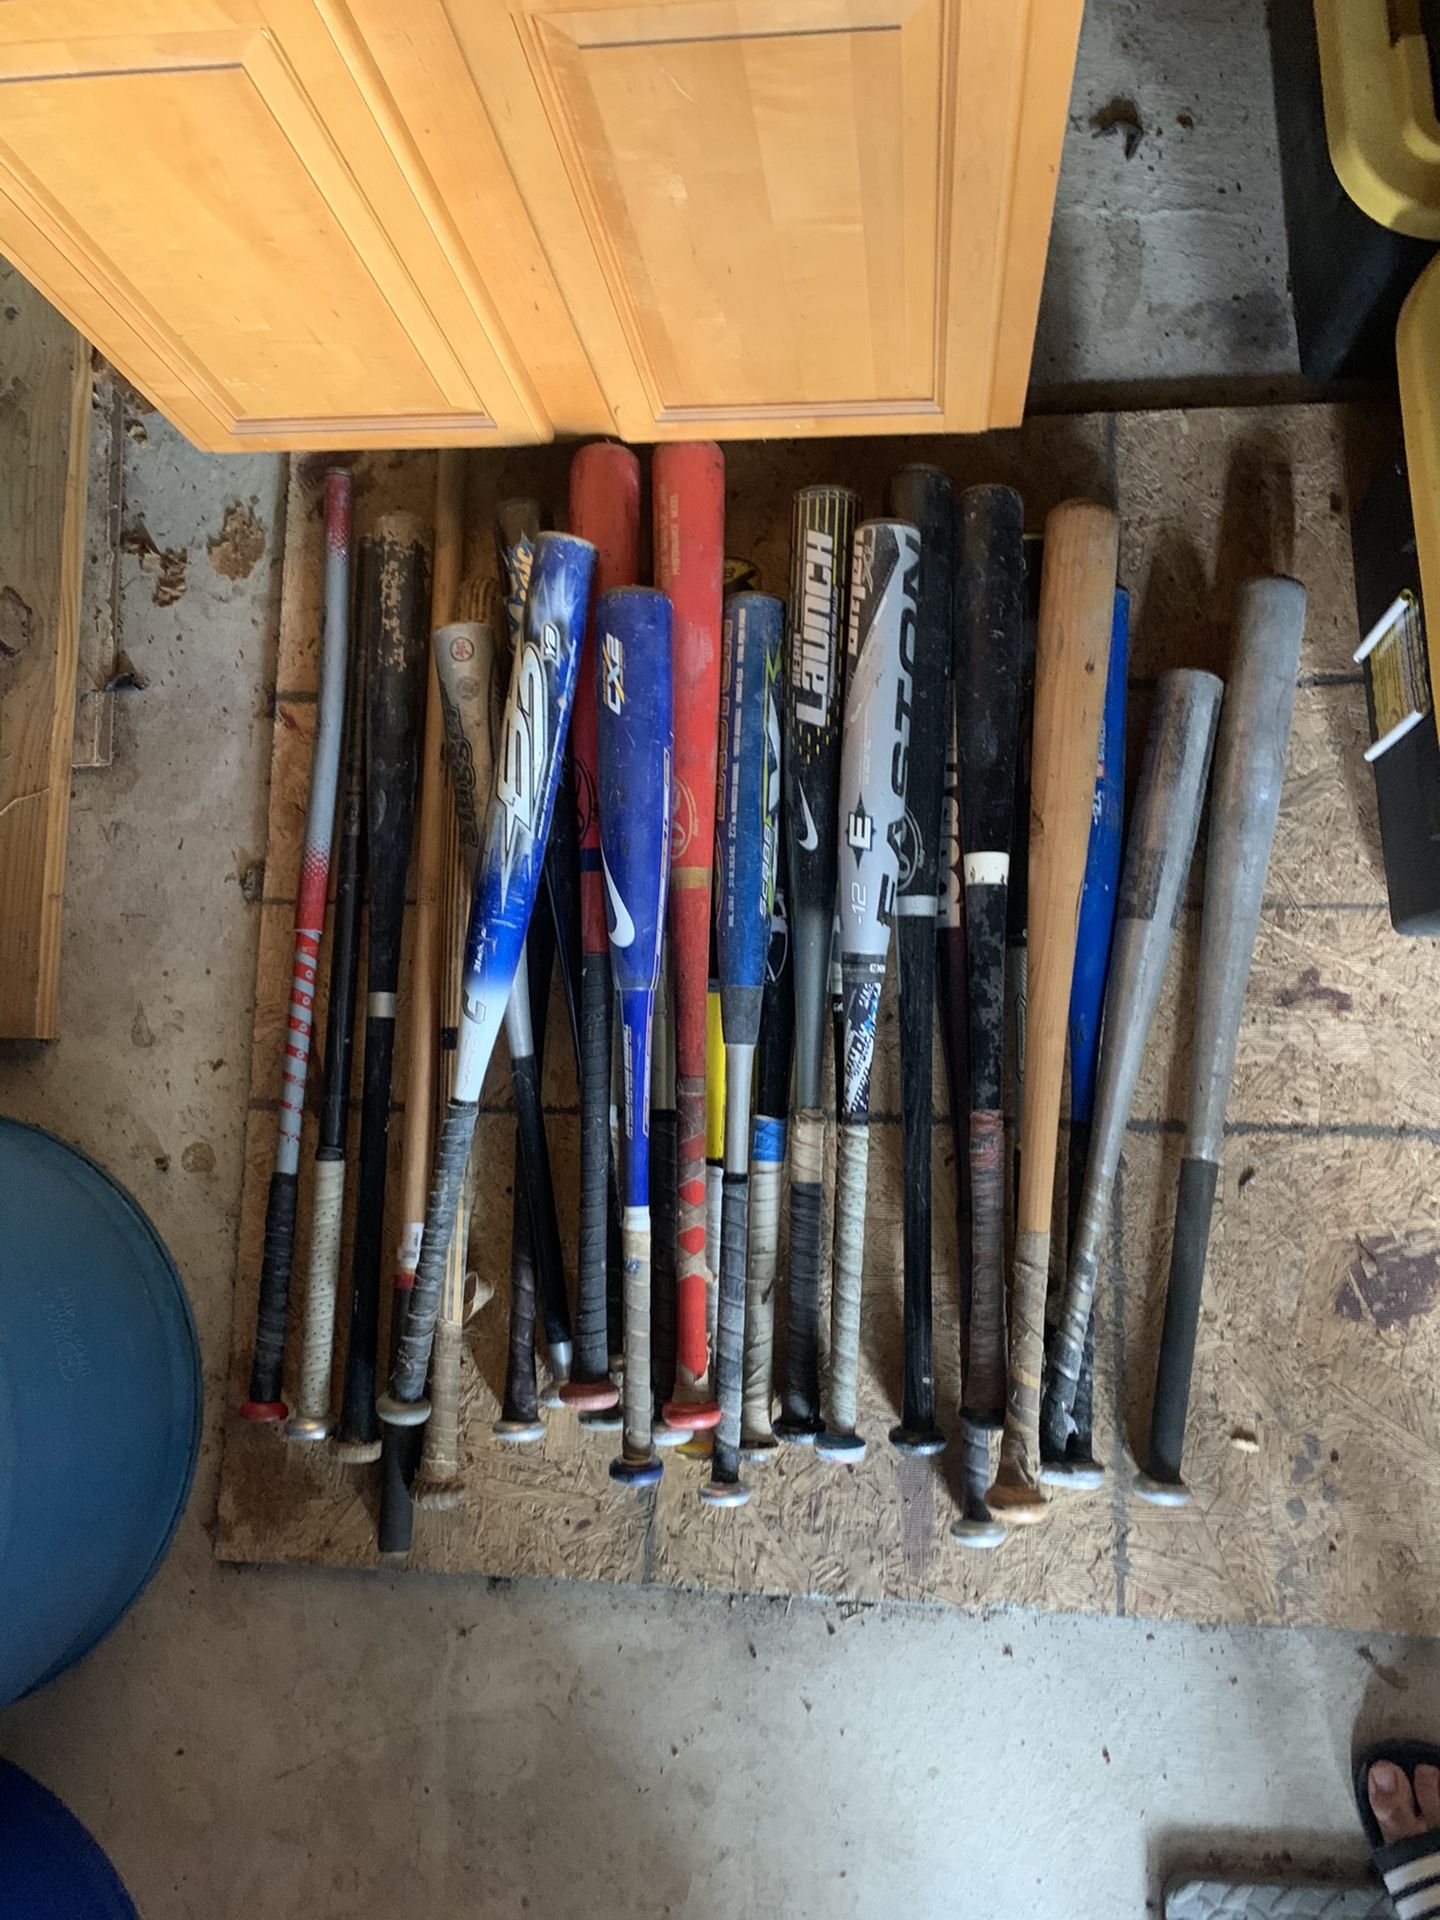 Used baseball bats/baseball equipment